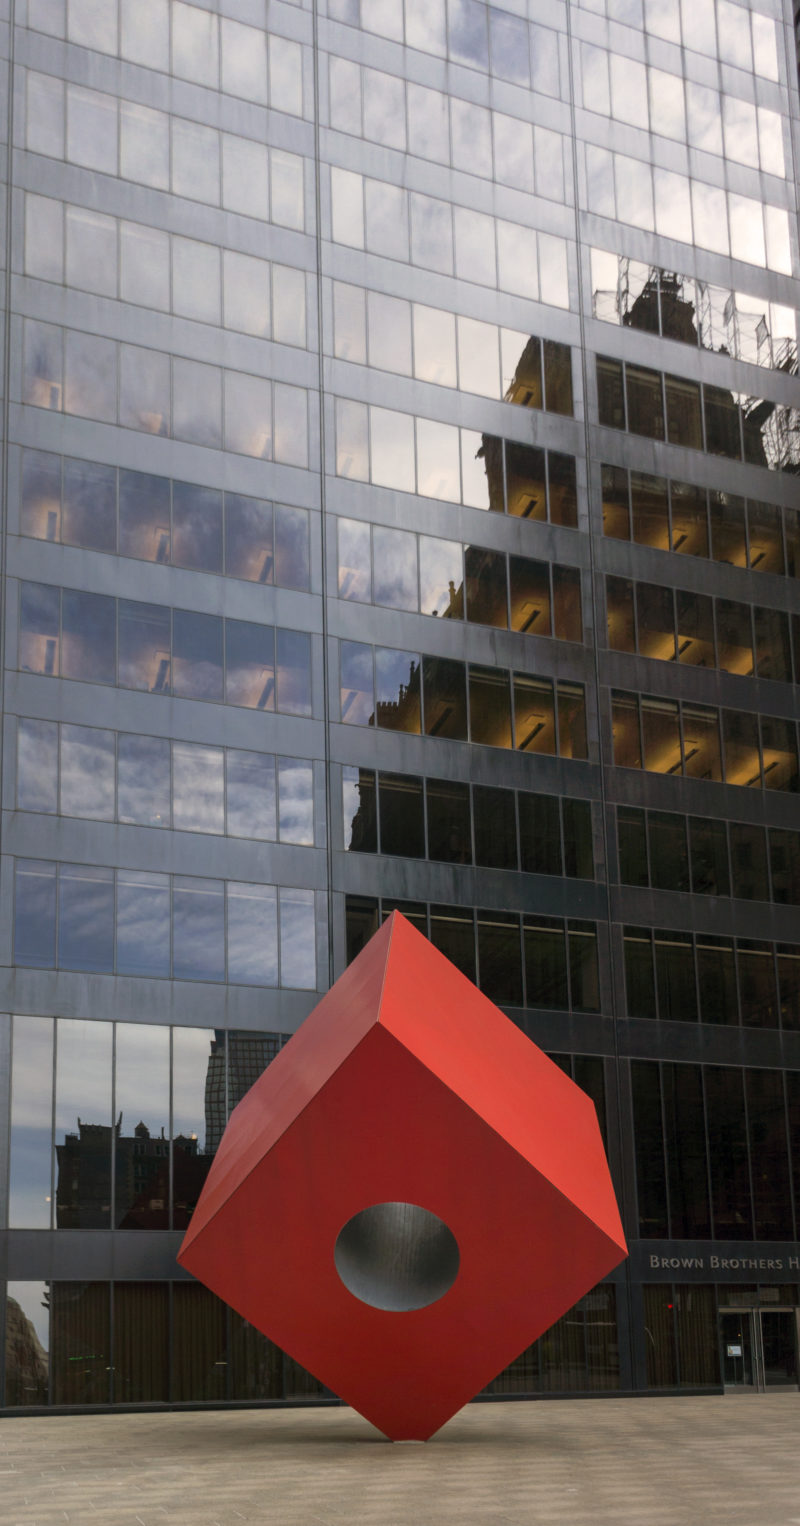 Isamu Noguchi - Red Cube, 1968, steel, aluminum, 24 feet tall, installation view, 140 Broadway, New York